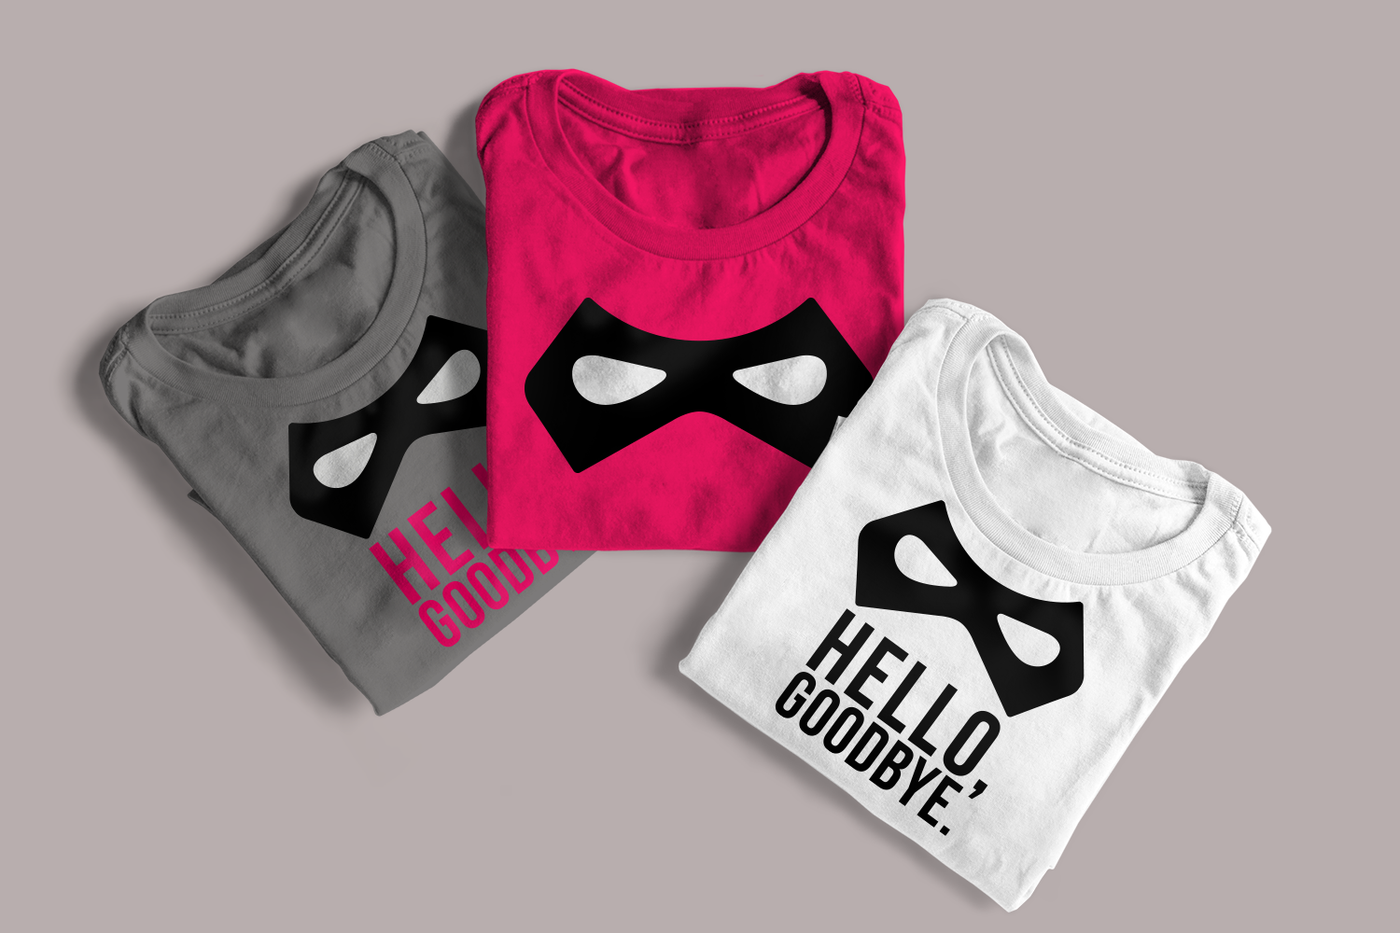 Superhero mask design with the words "hello, goodbye."